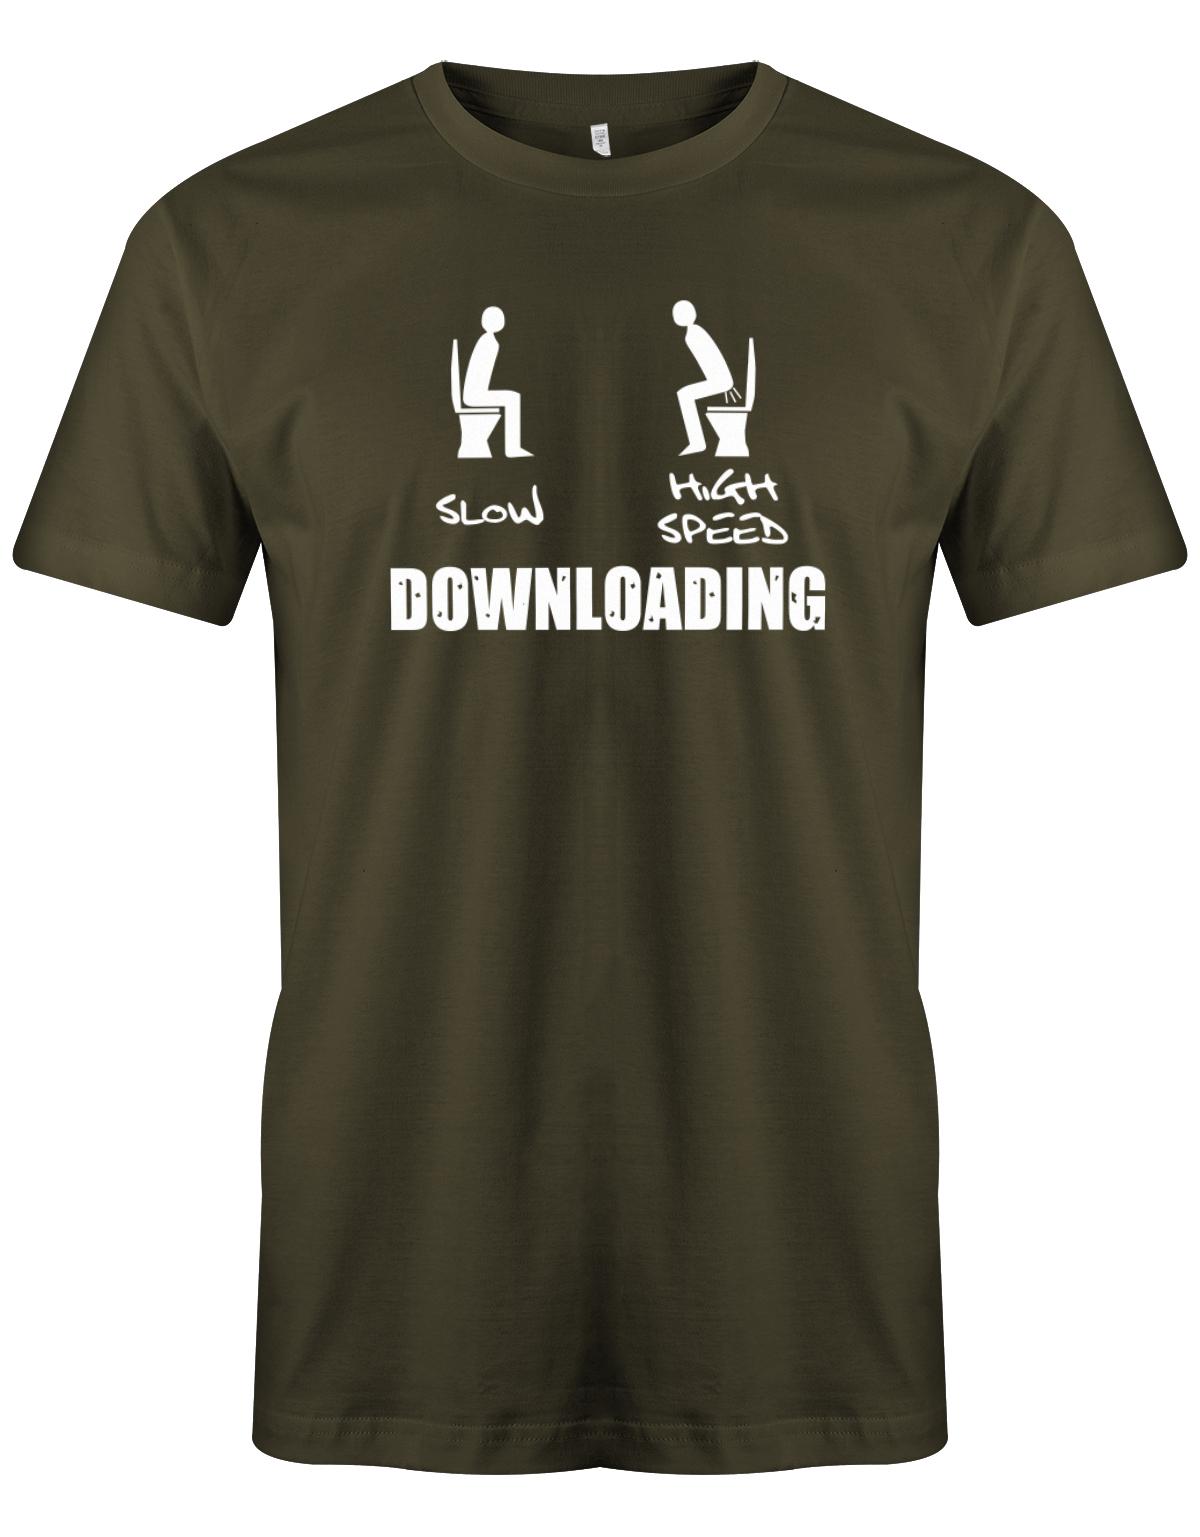 Downloading-Slow-Highspeed-Gamer-Shirt-Army